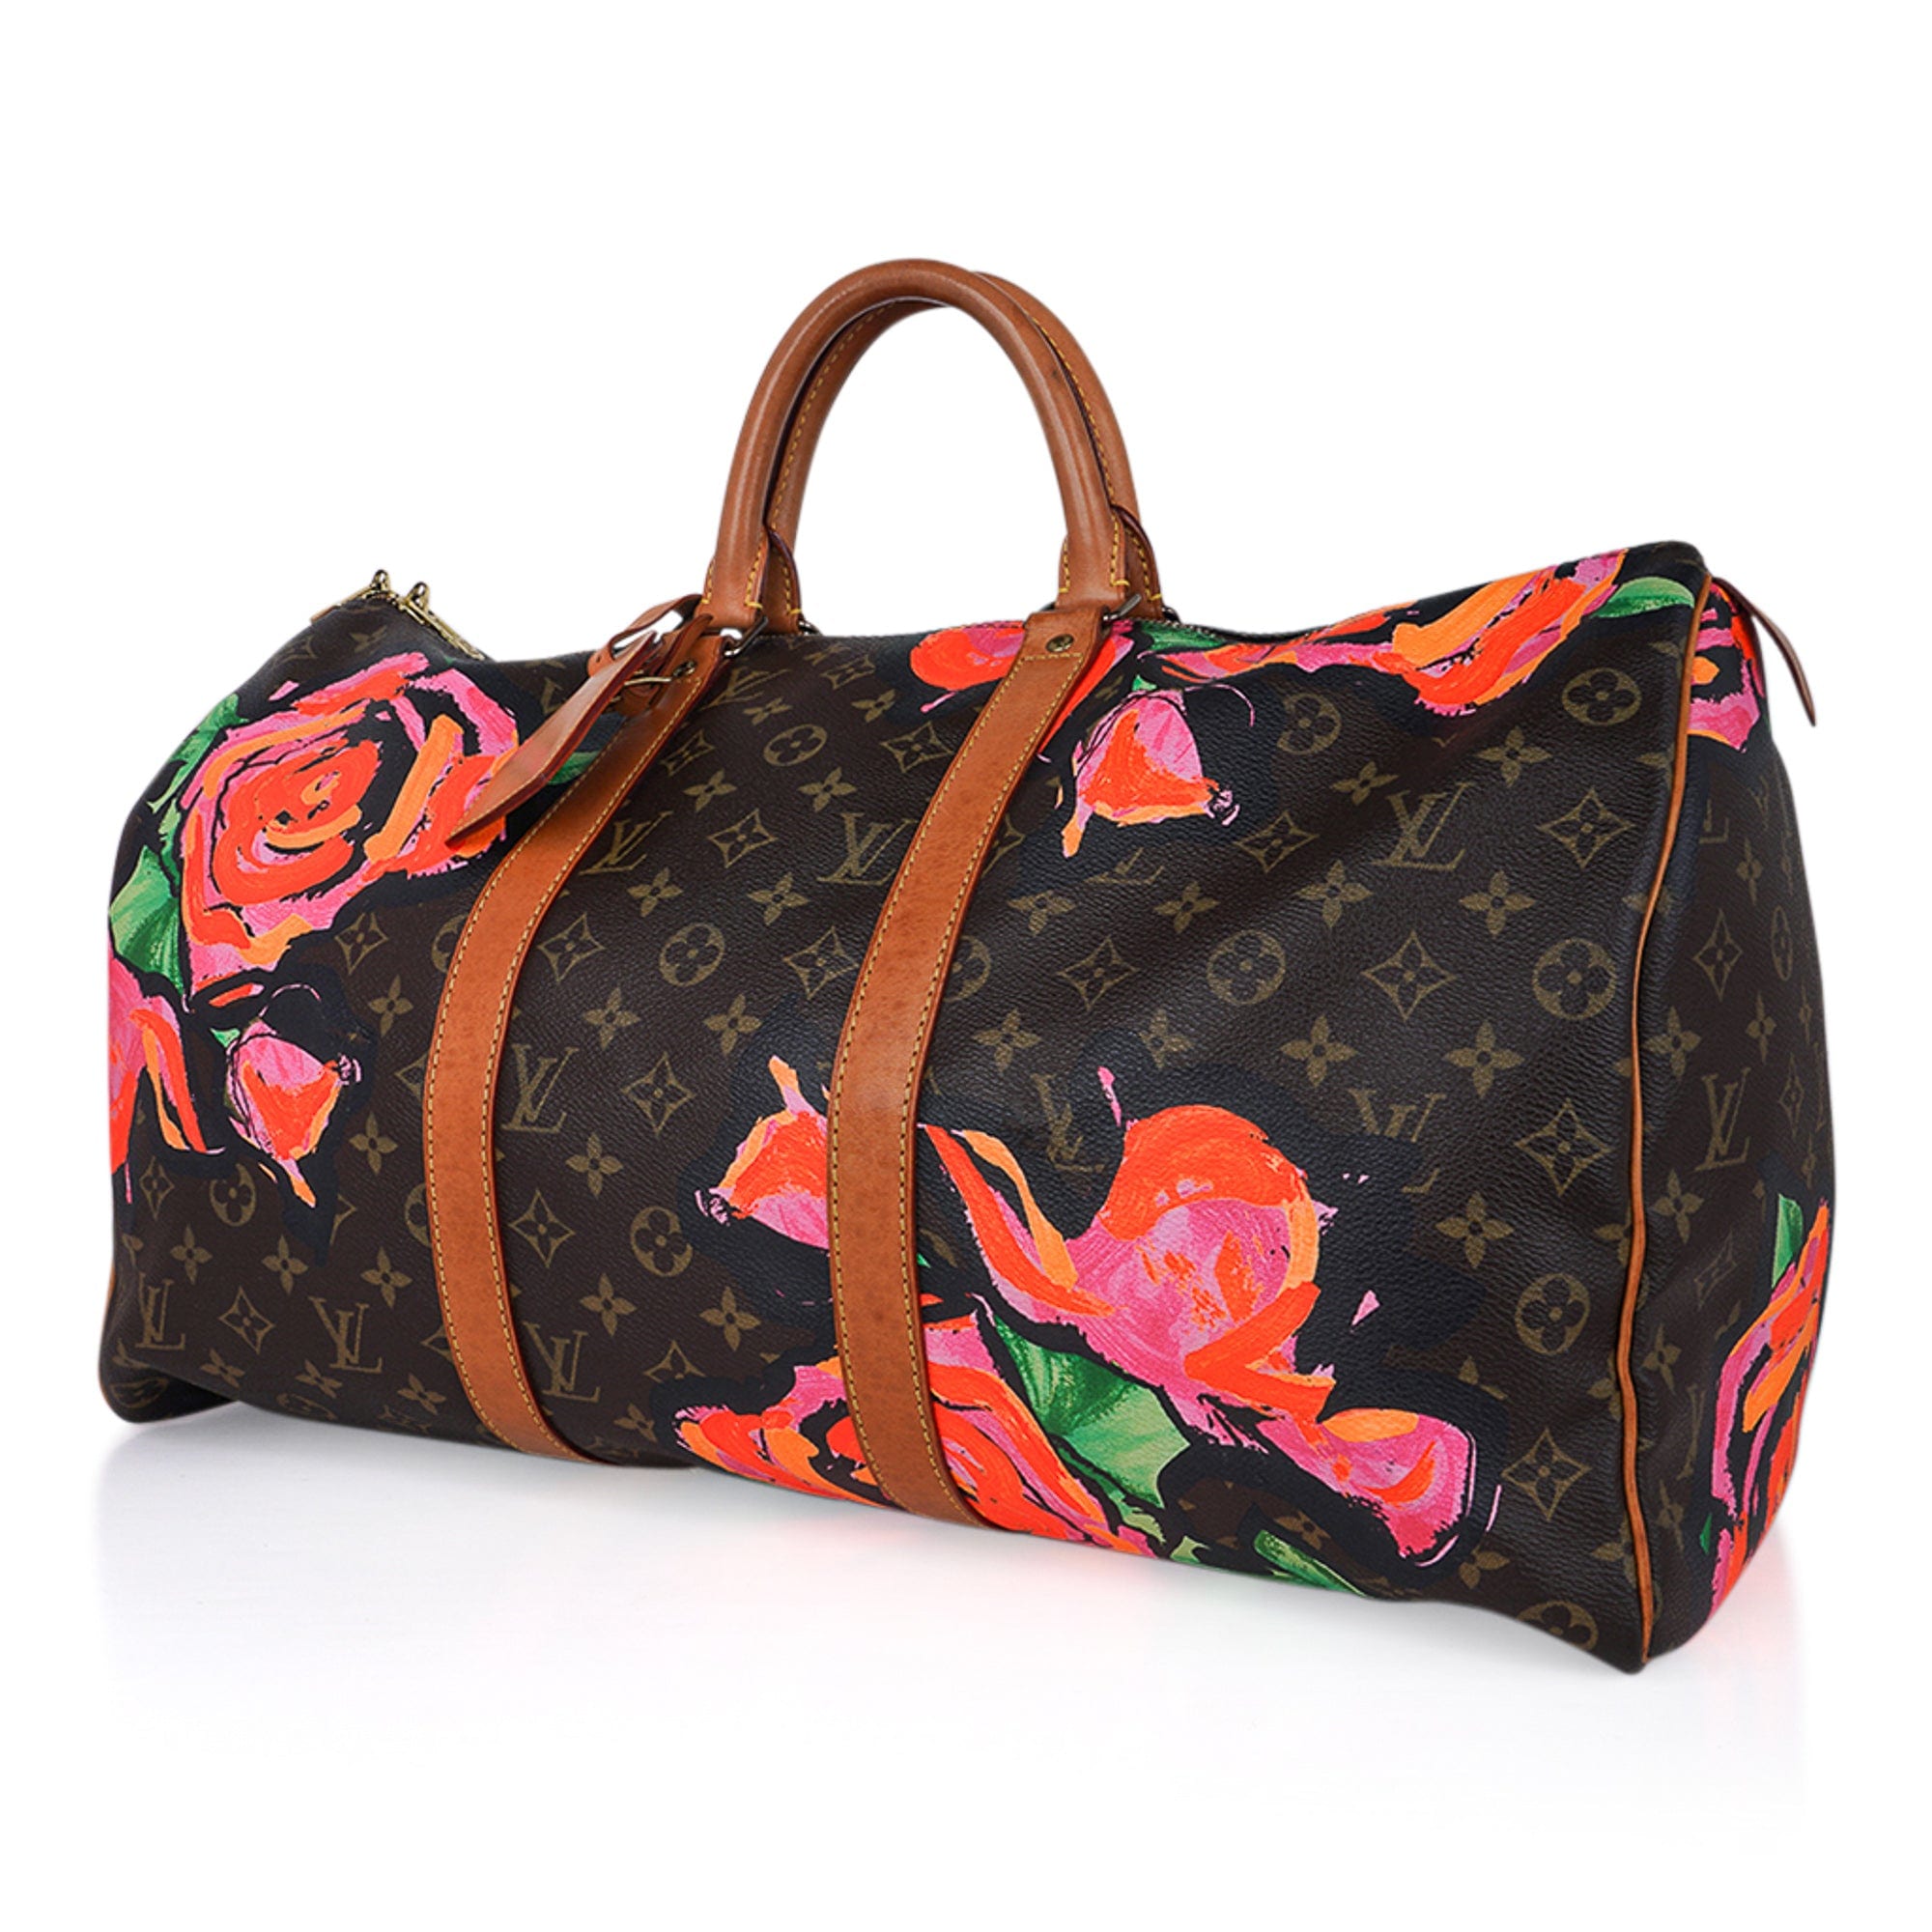 Louis Vuitton Stephen Sprouse Bags & Handbags for Women